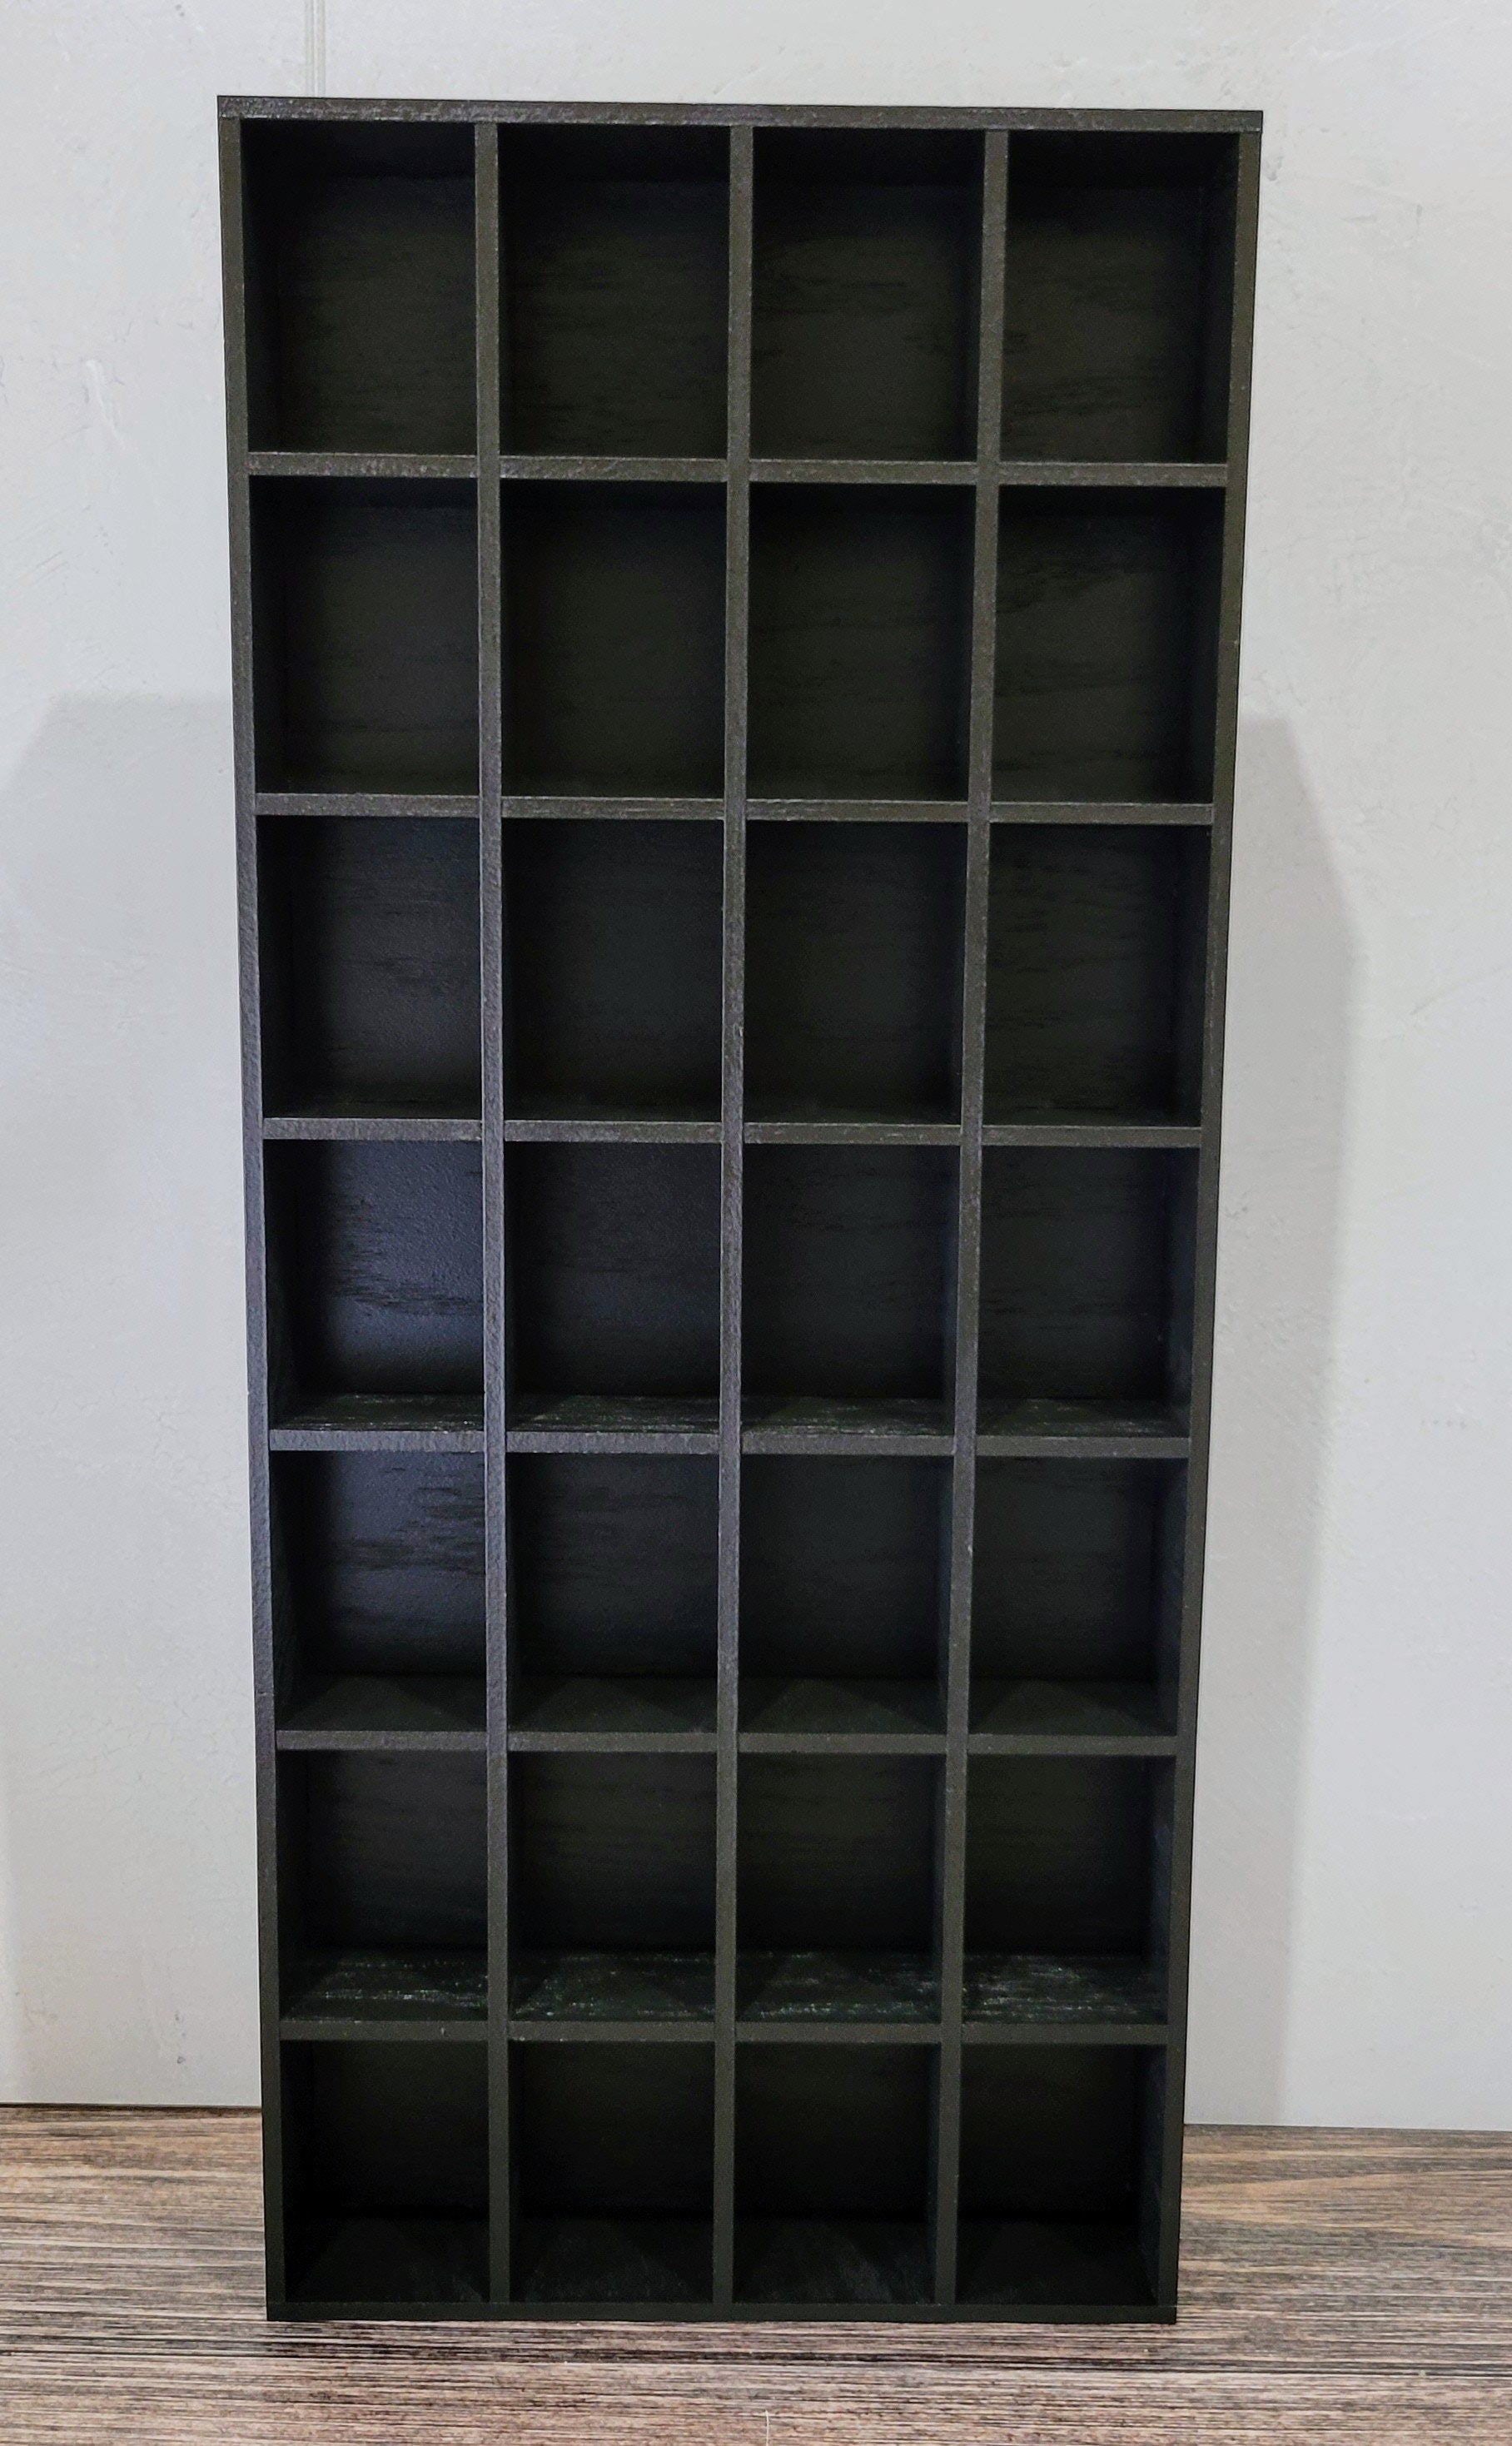 28 Compartment Wooden Display Shelf - Trinket Shelf - Curio Cabinet- Knick Knack Collection Display - Printer Tray -Figure Organizer Display